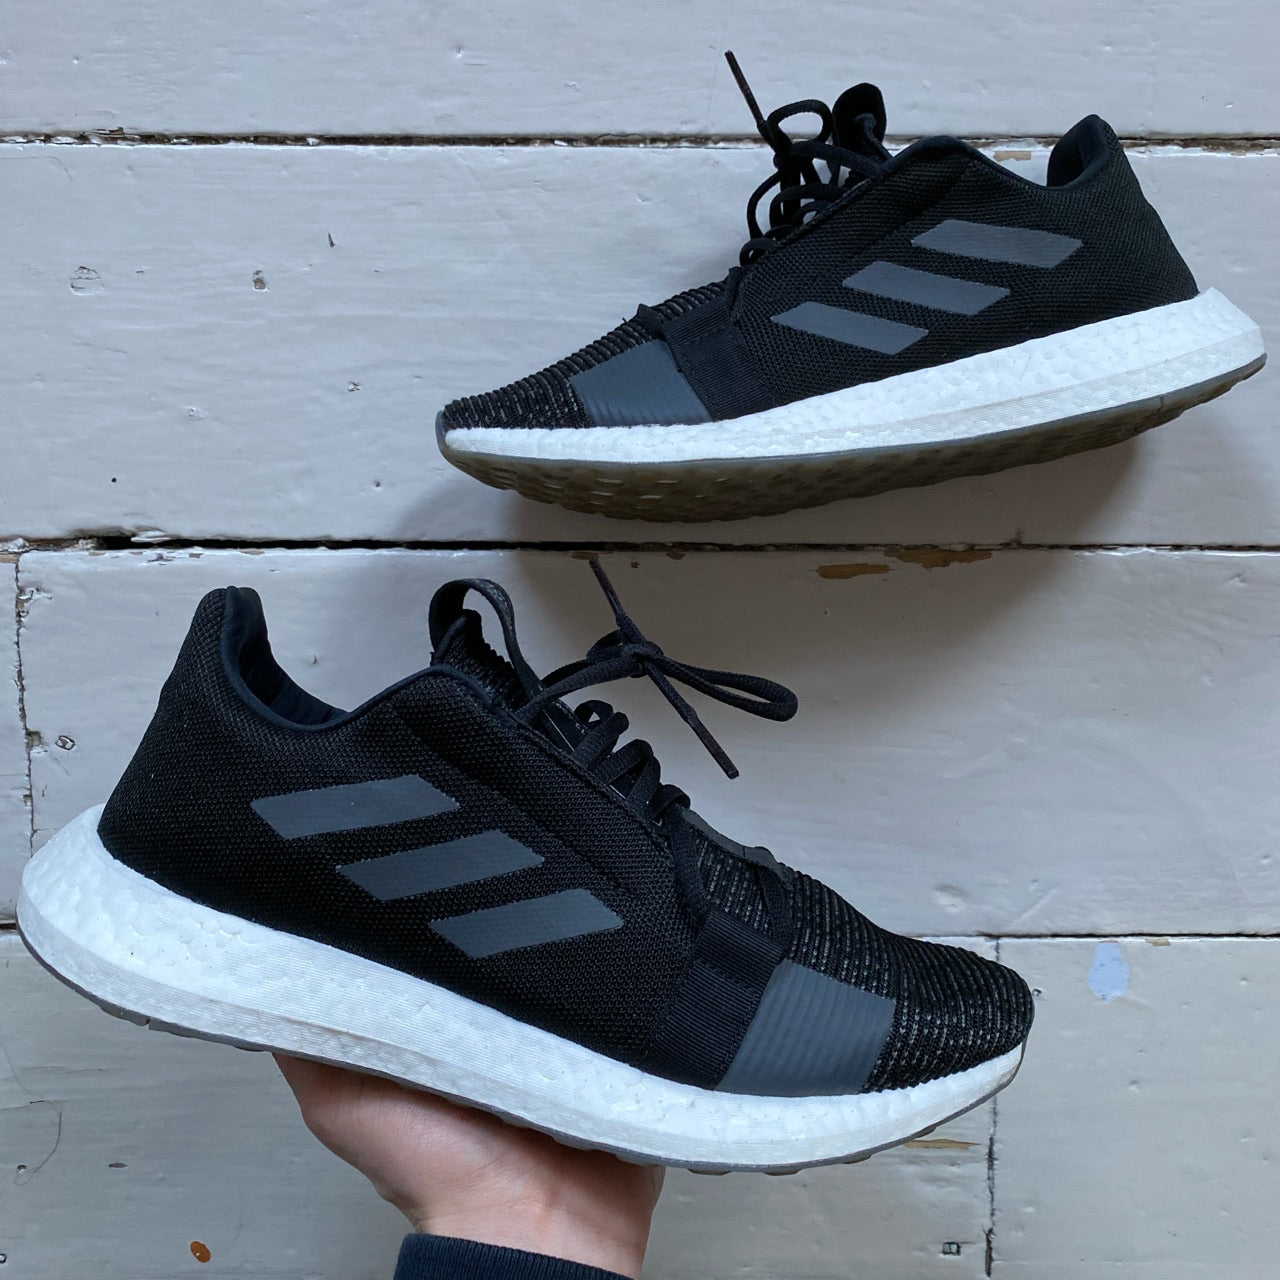 Adidas Ultra Boost Black and White (UK 8)